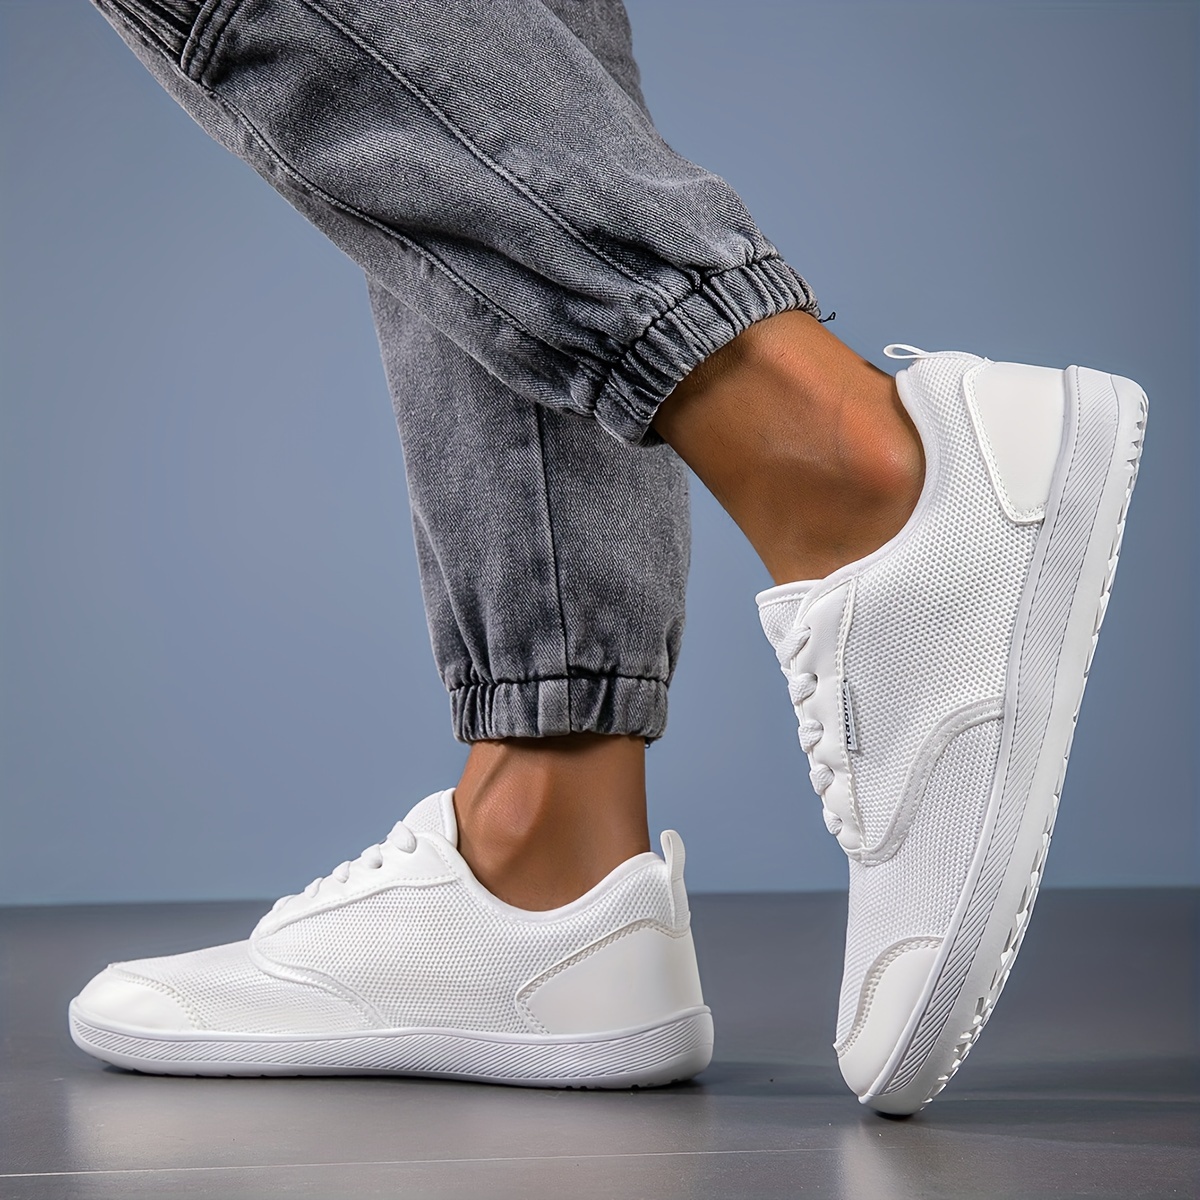 solid versatile sneakers men s minimalist style round toe details 3